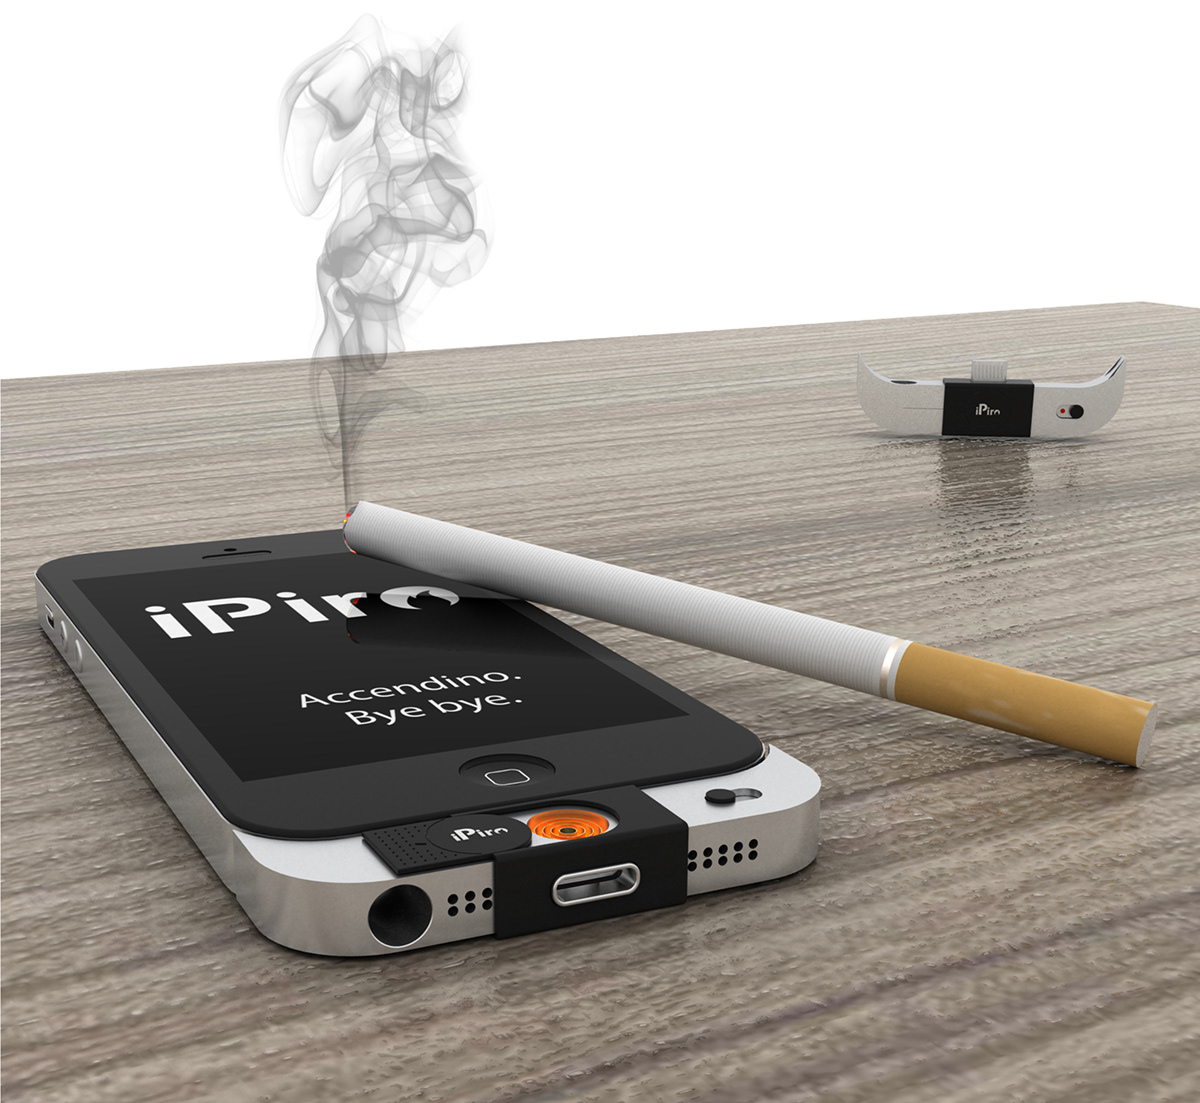 cigarettes smart phone lighter dsign cell phone